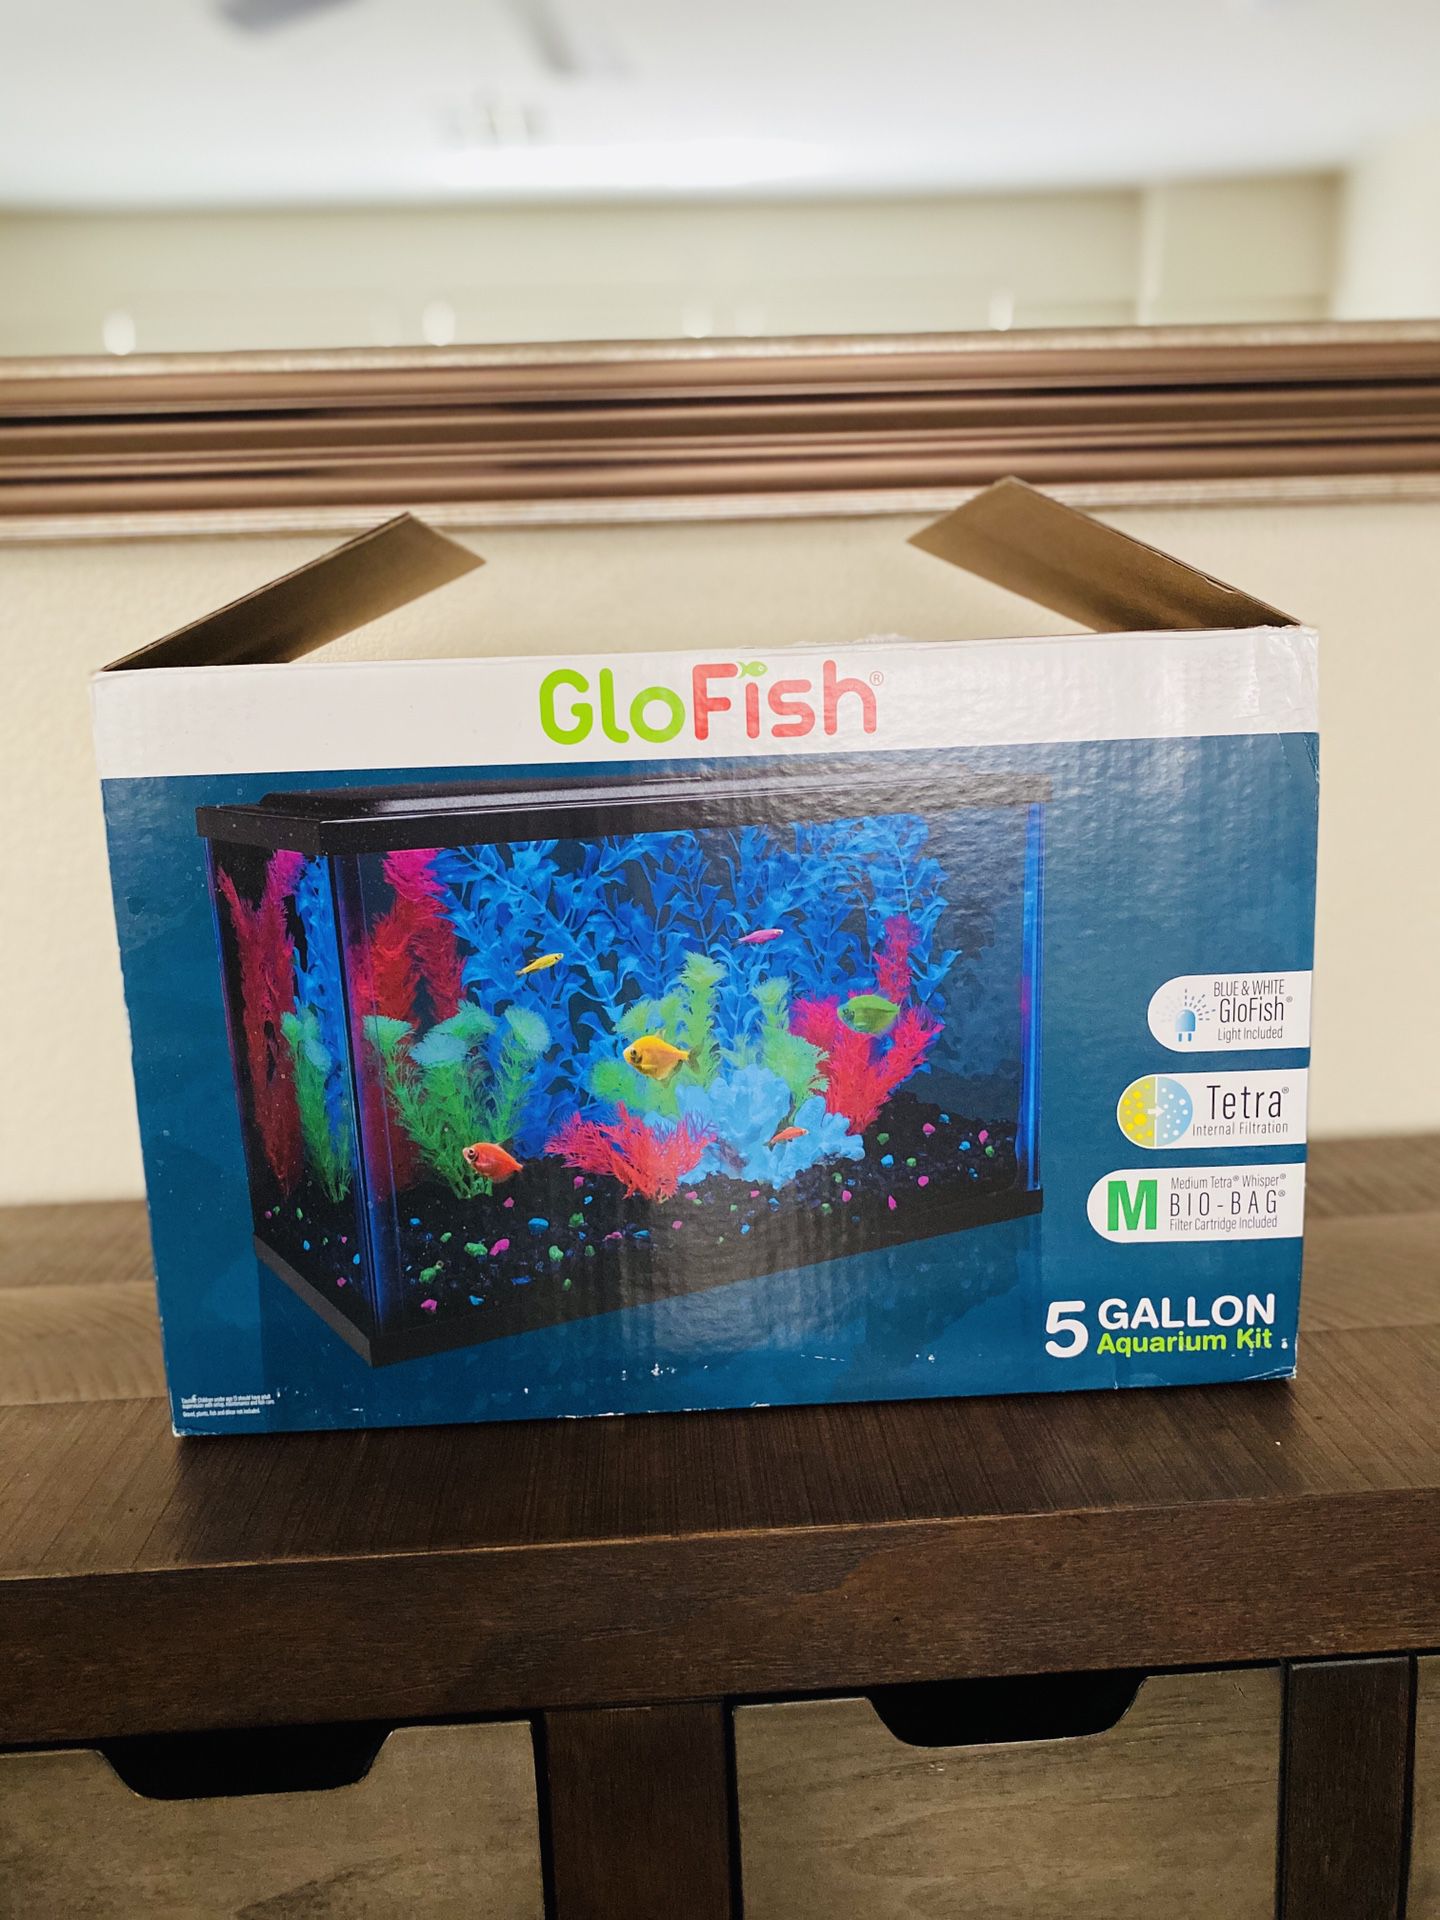 New open box glow fish aquarium 5 gallon